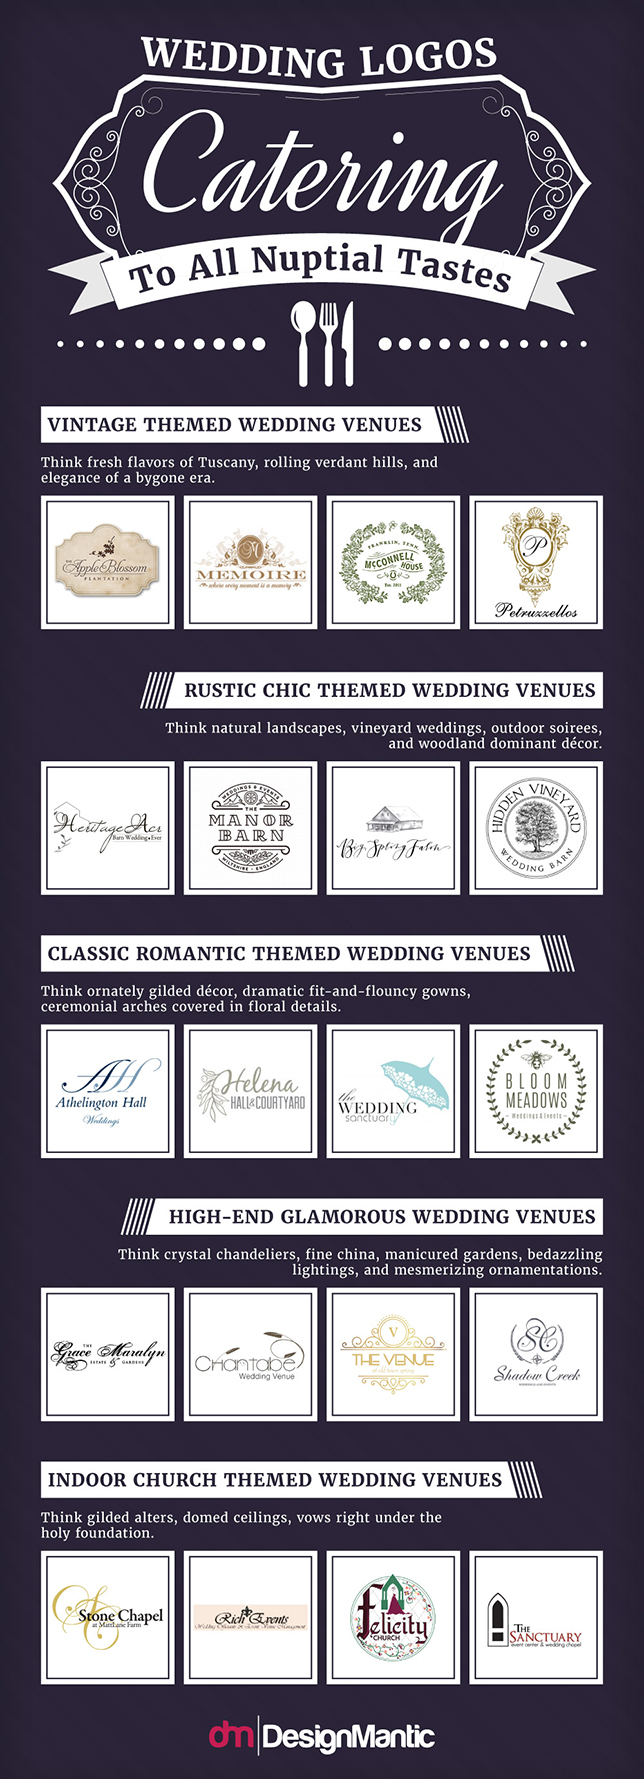 Wedding Catering logos infographic